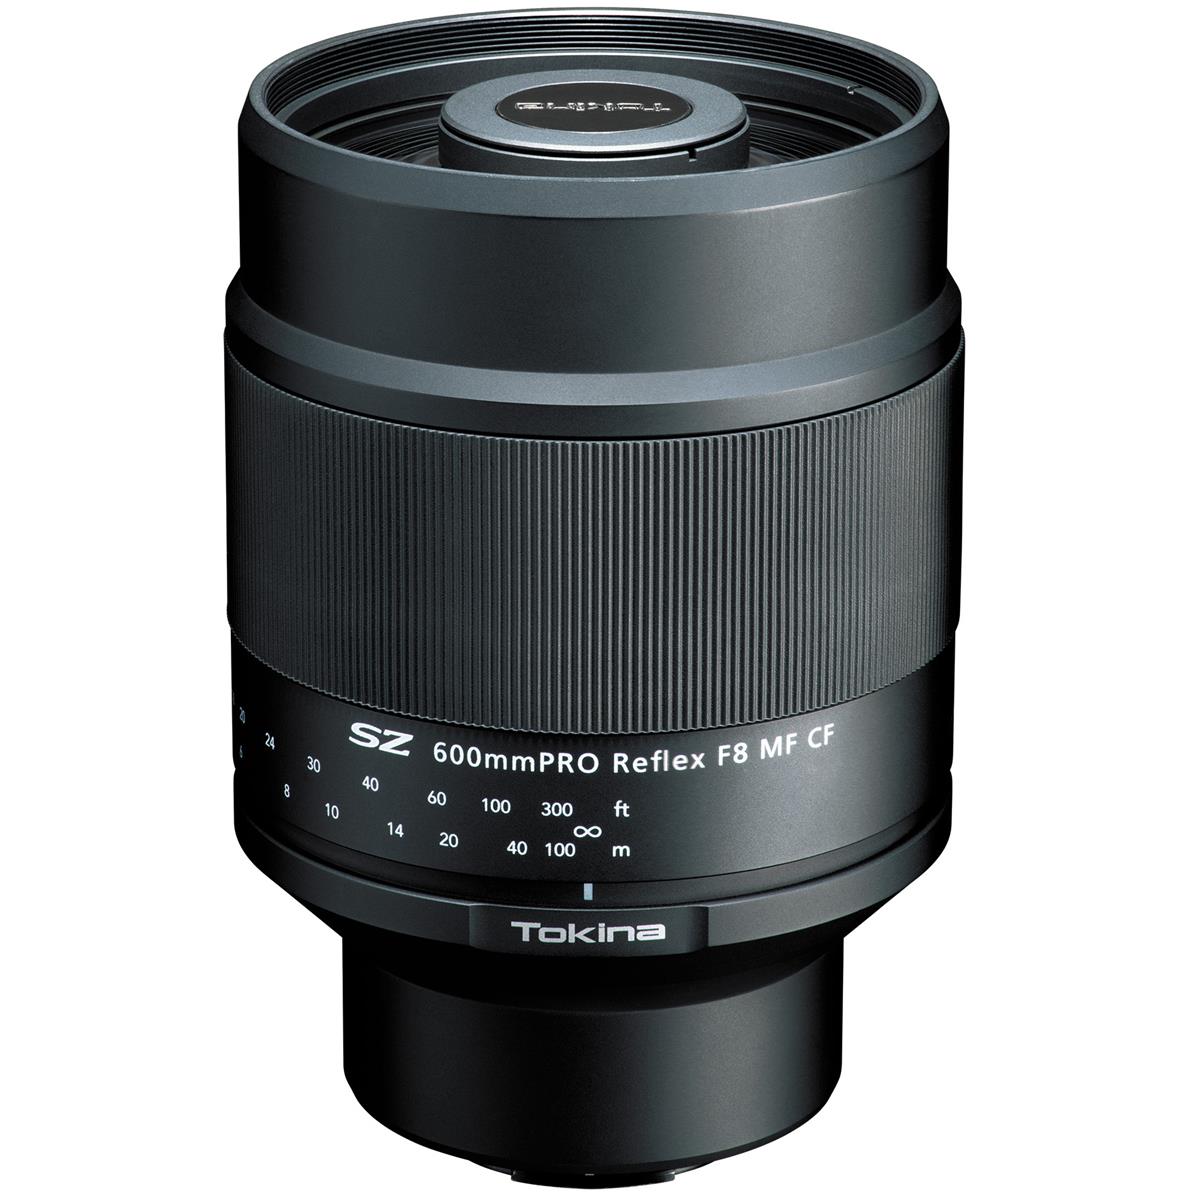 Image of Tokina SZ PRO 600mm f/8 Reflex MF CF Lens for Canon EF-M